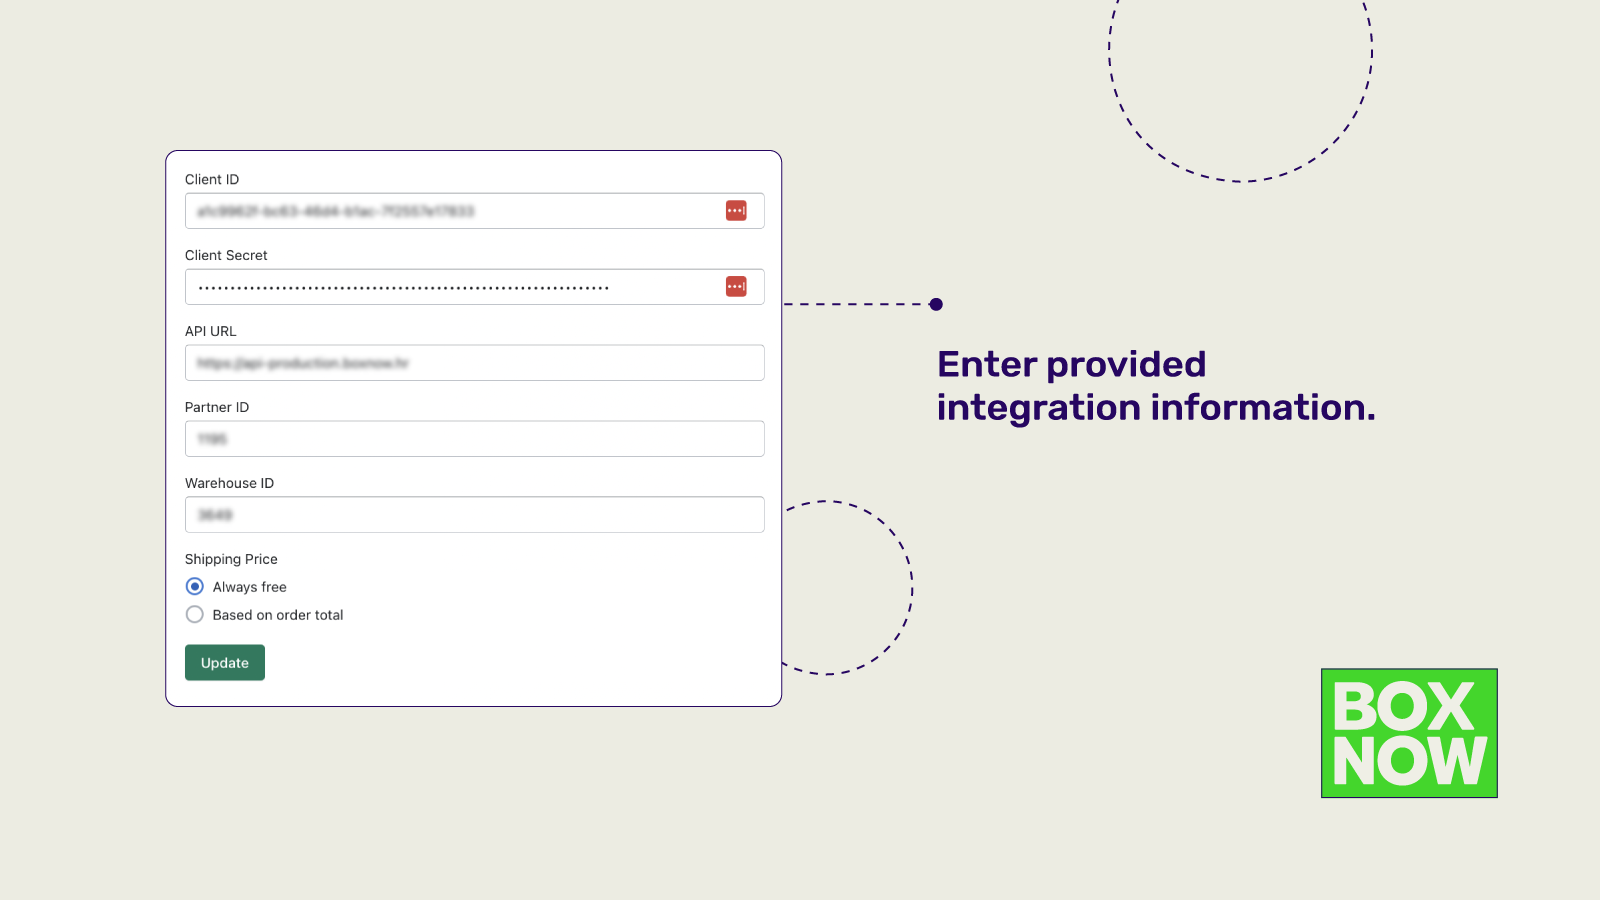 Enter provided integration information